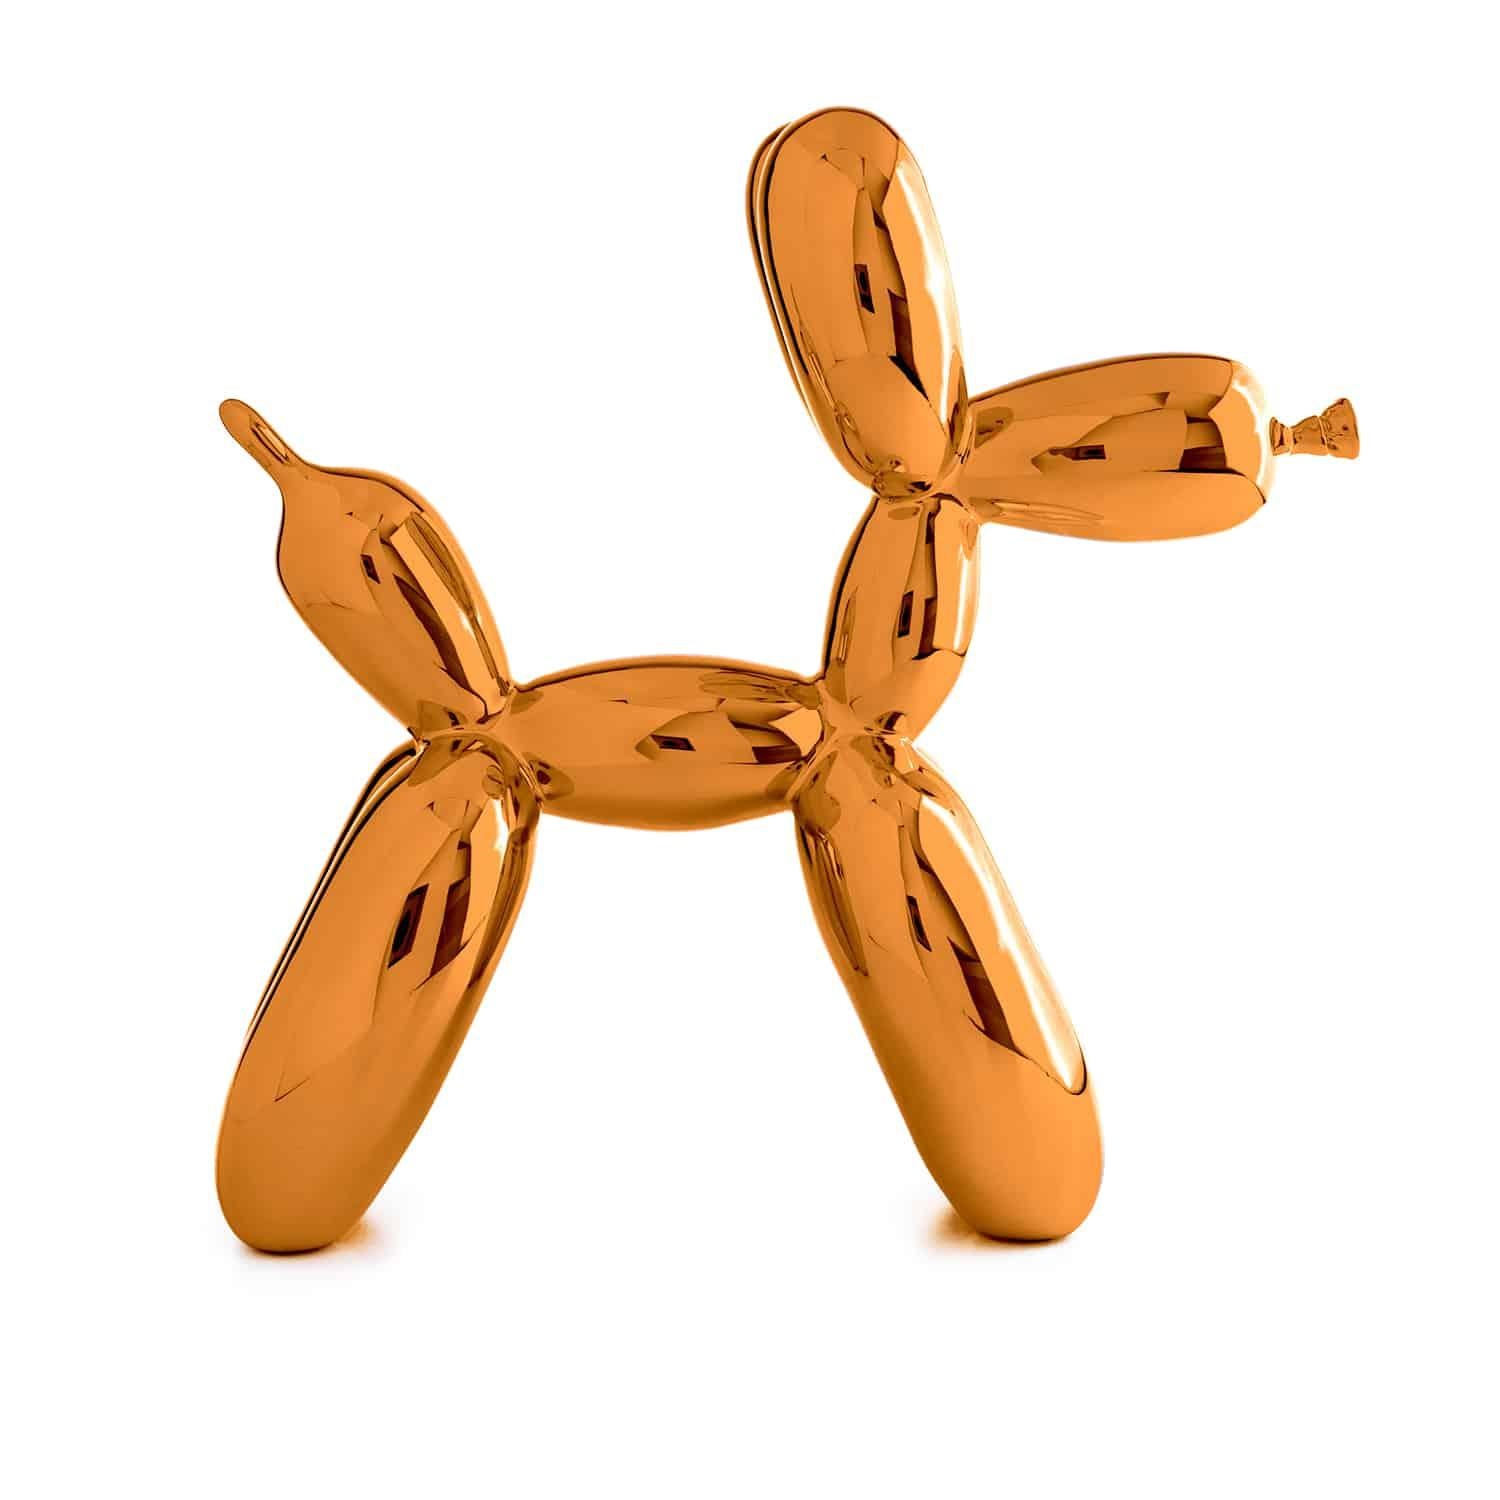 Balloon Dog ( After ) - Orange - Pop Art Sculpture by After Jeff Koons